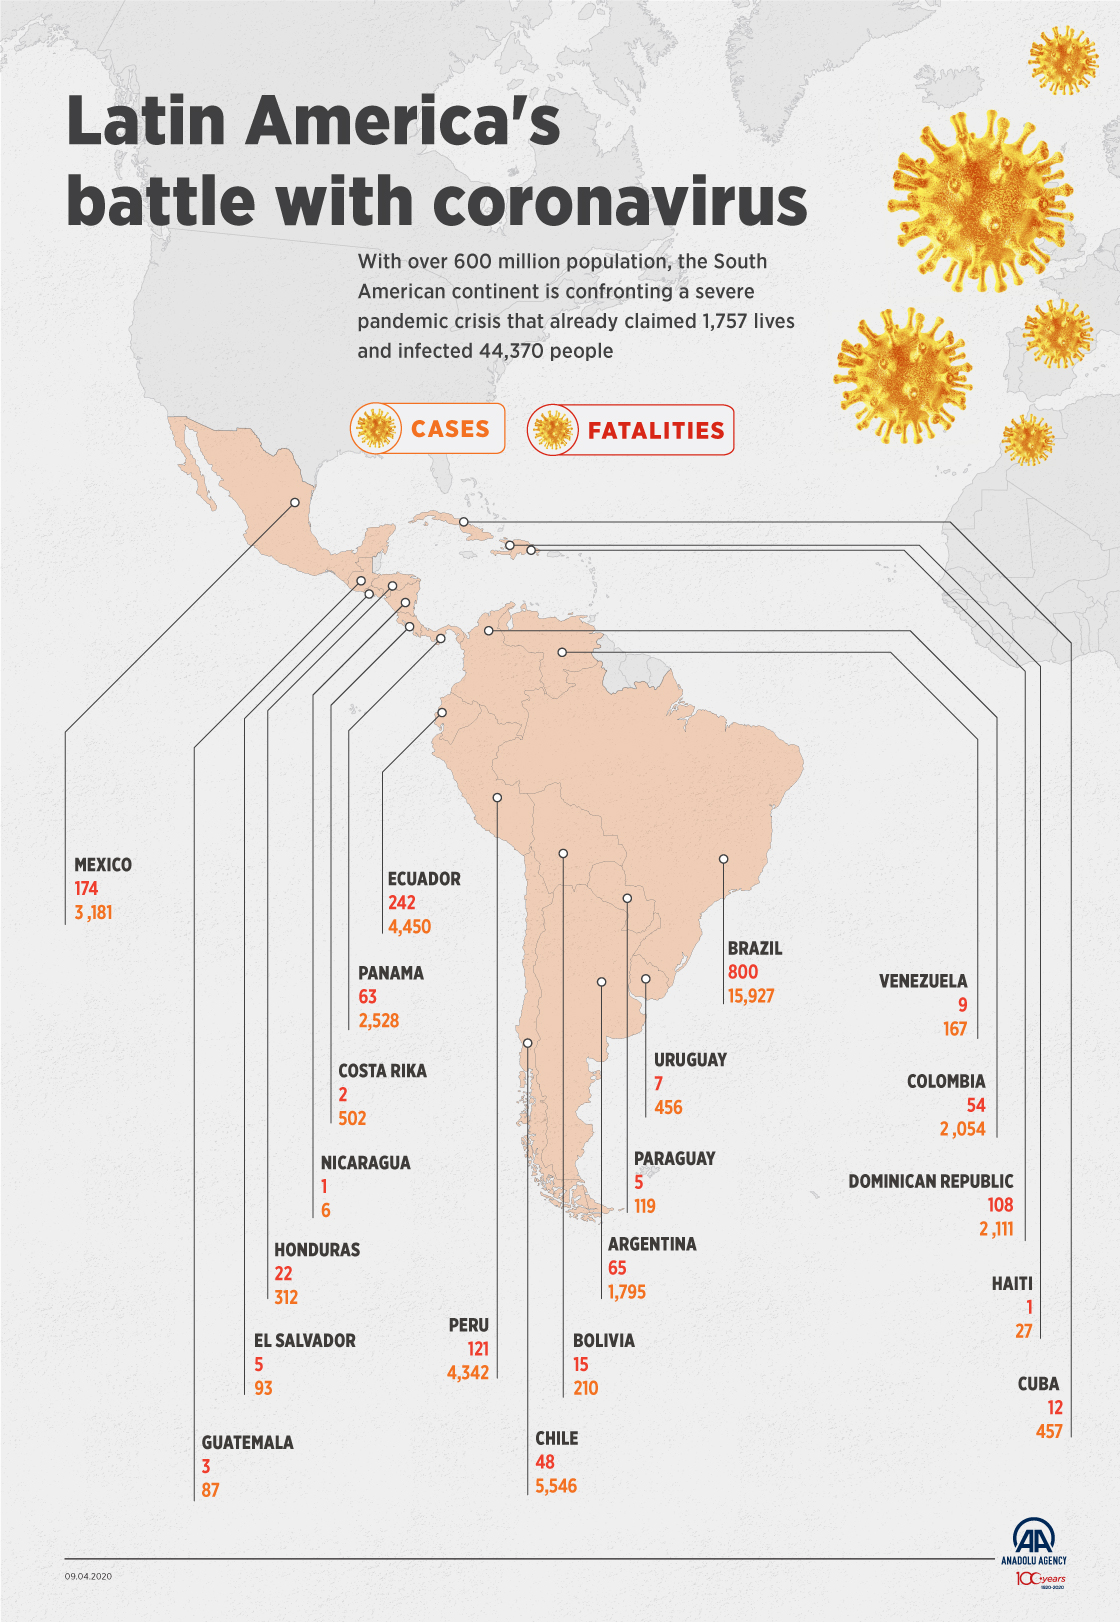 Latin America's battle with coronavirus